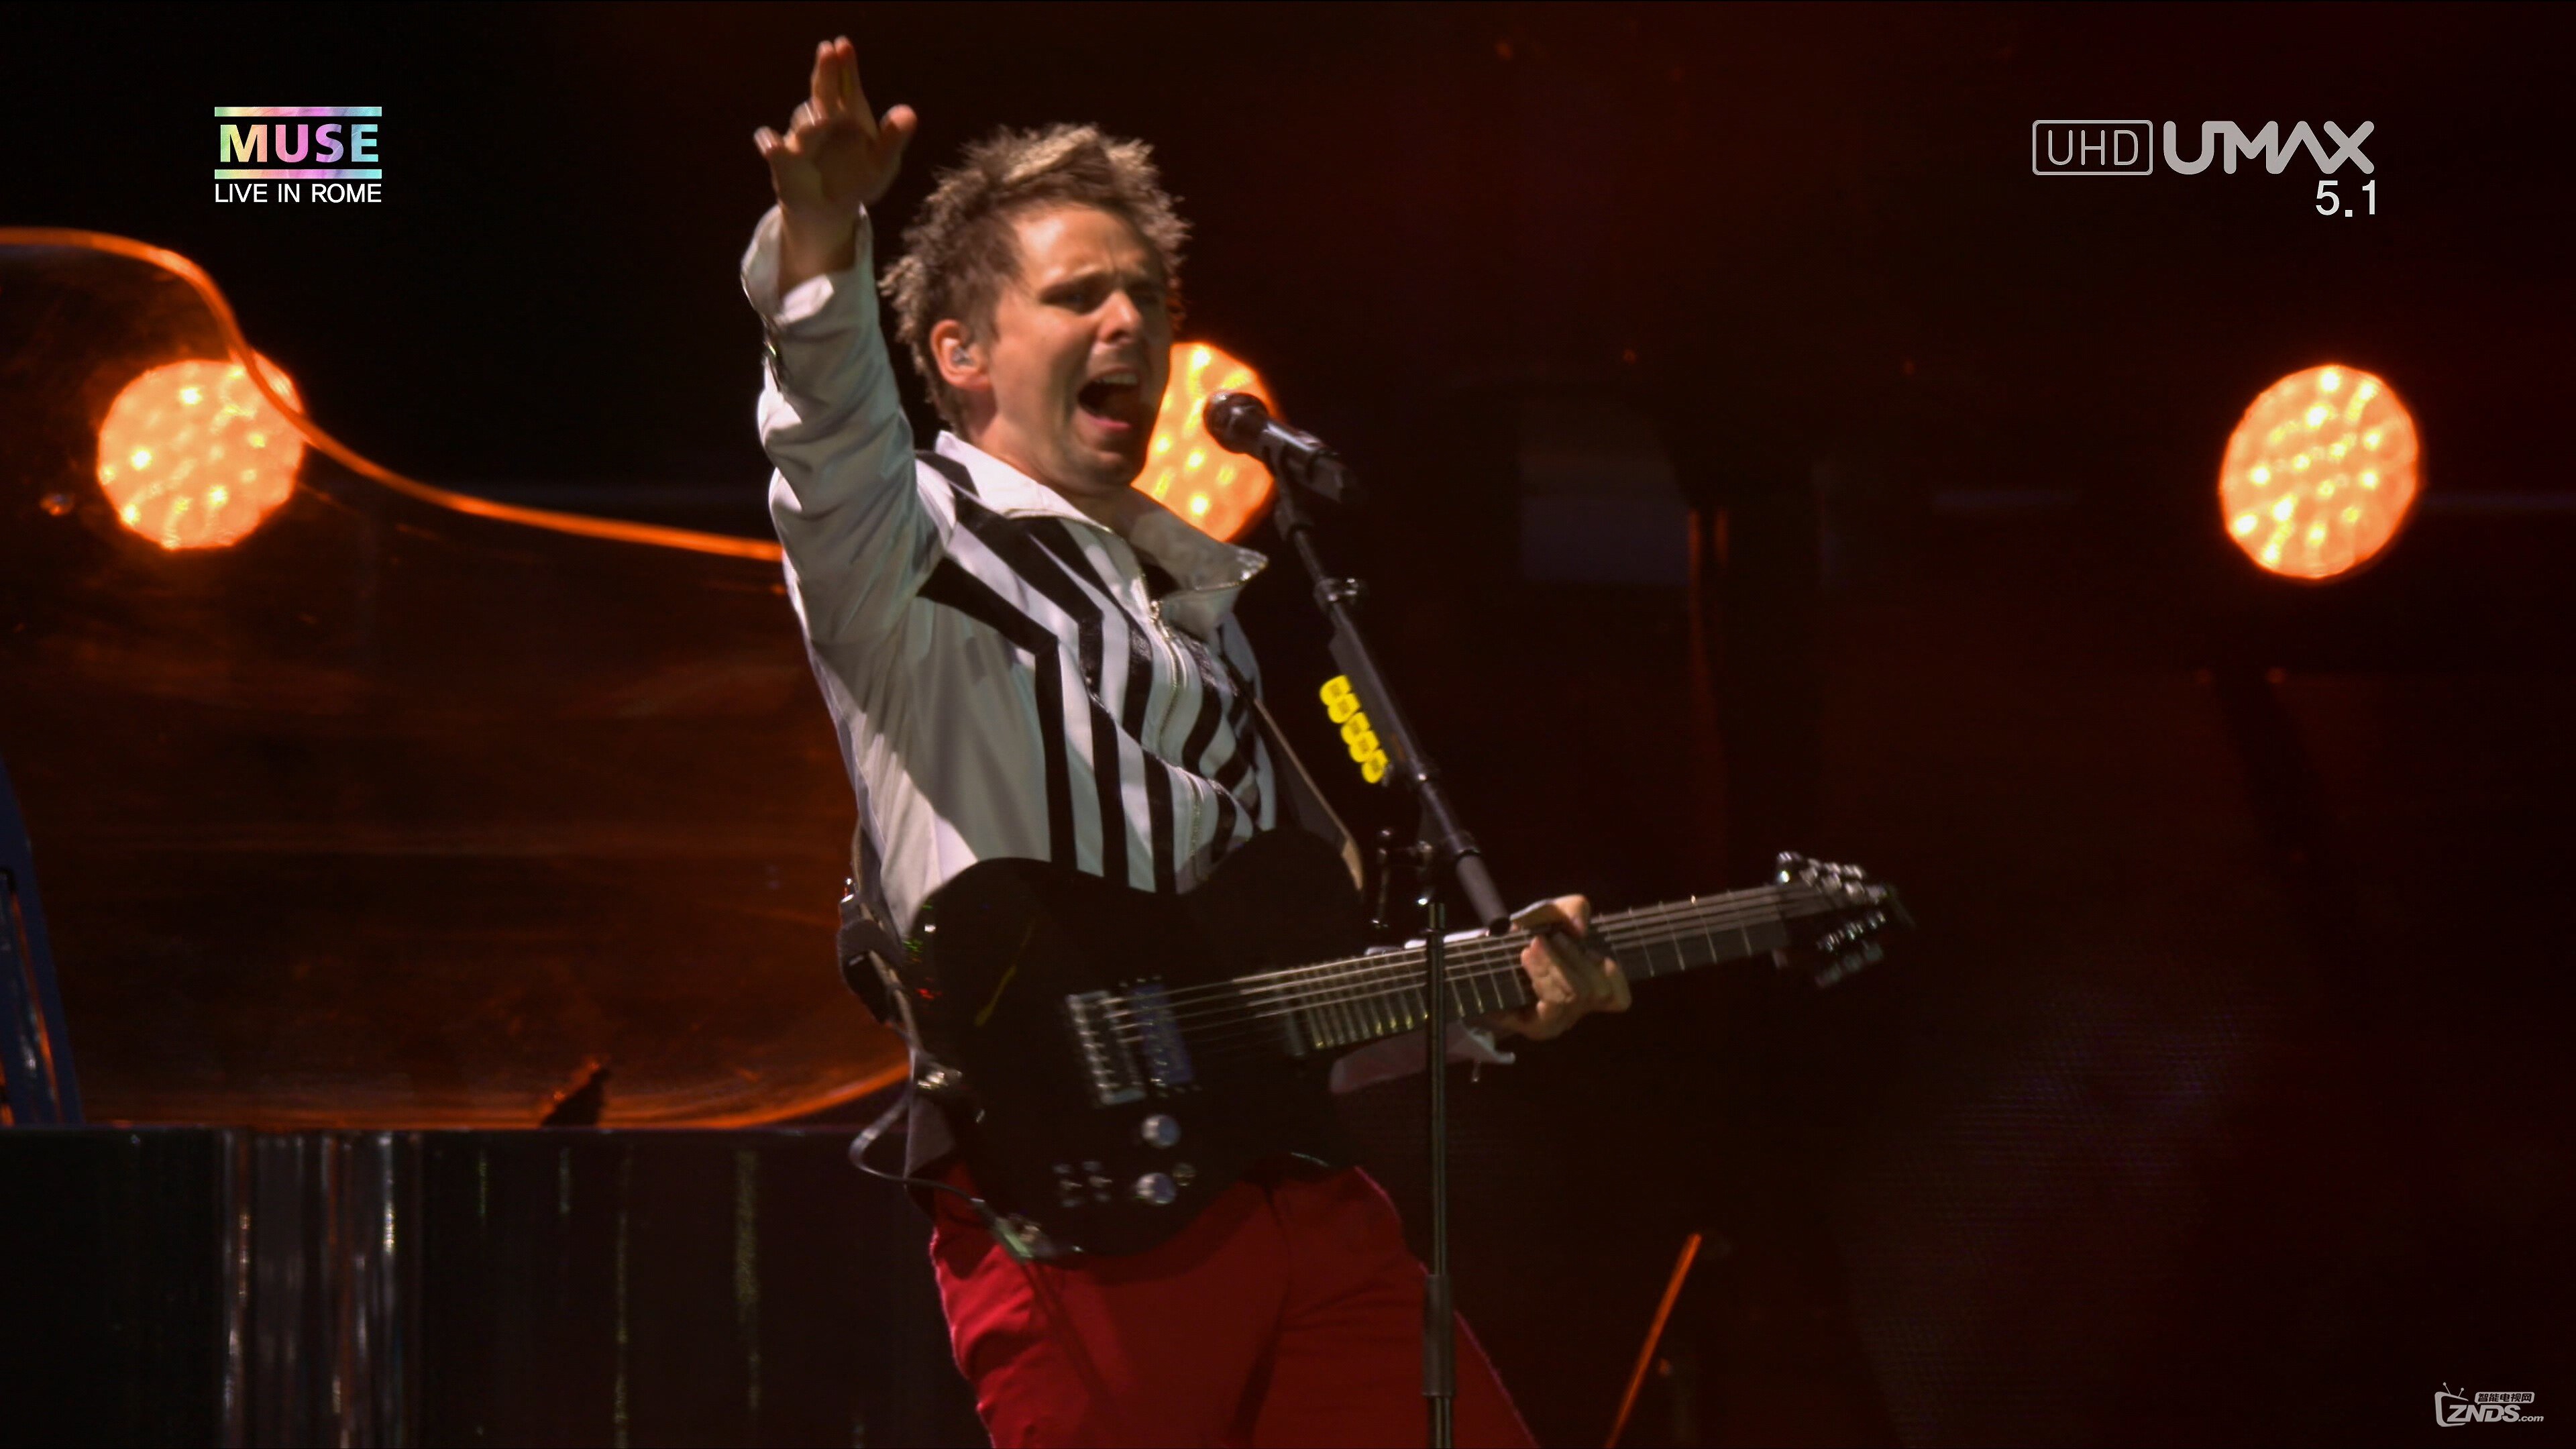 Muse.Live.At.Rome.Olympic.Stadium.2013.2160p.UHDTV.HEVC.mkv_20160312_224826.109.jpg